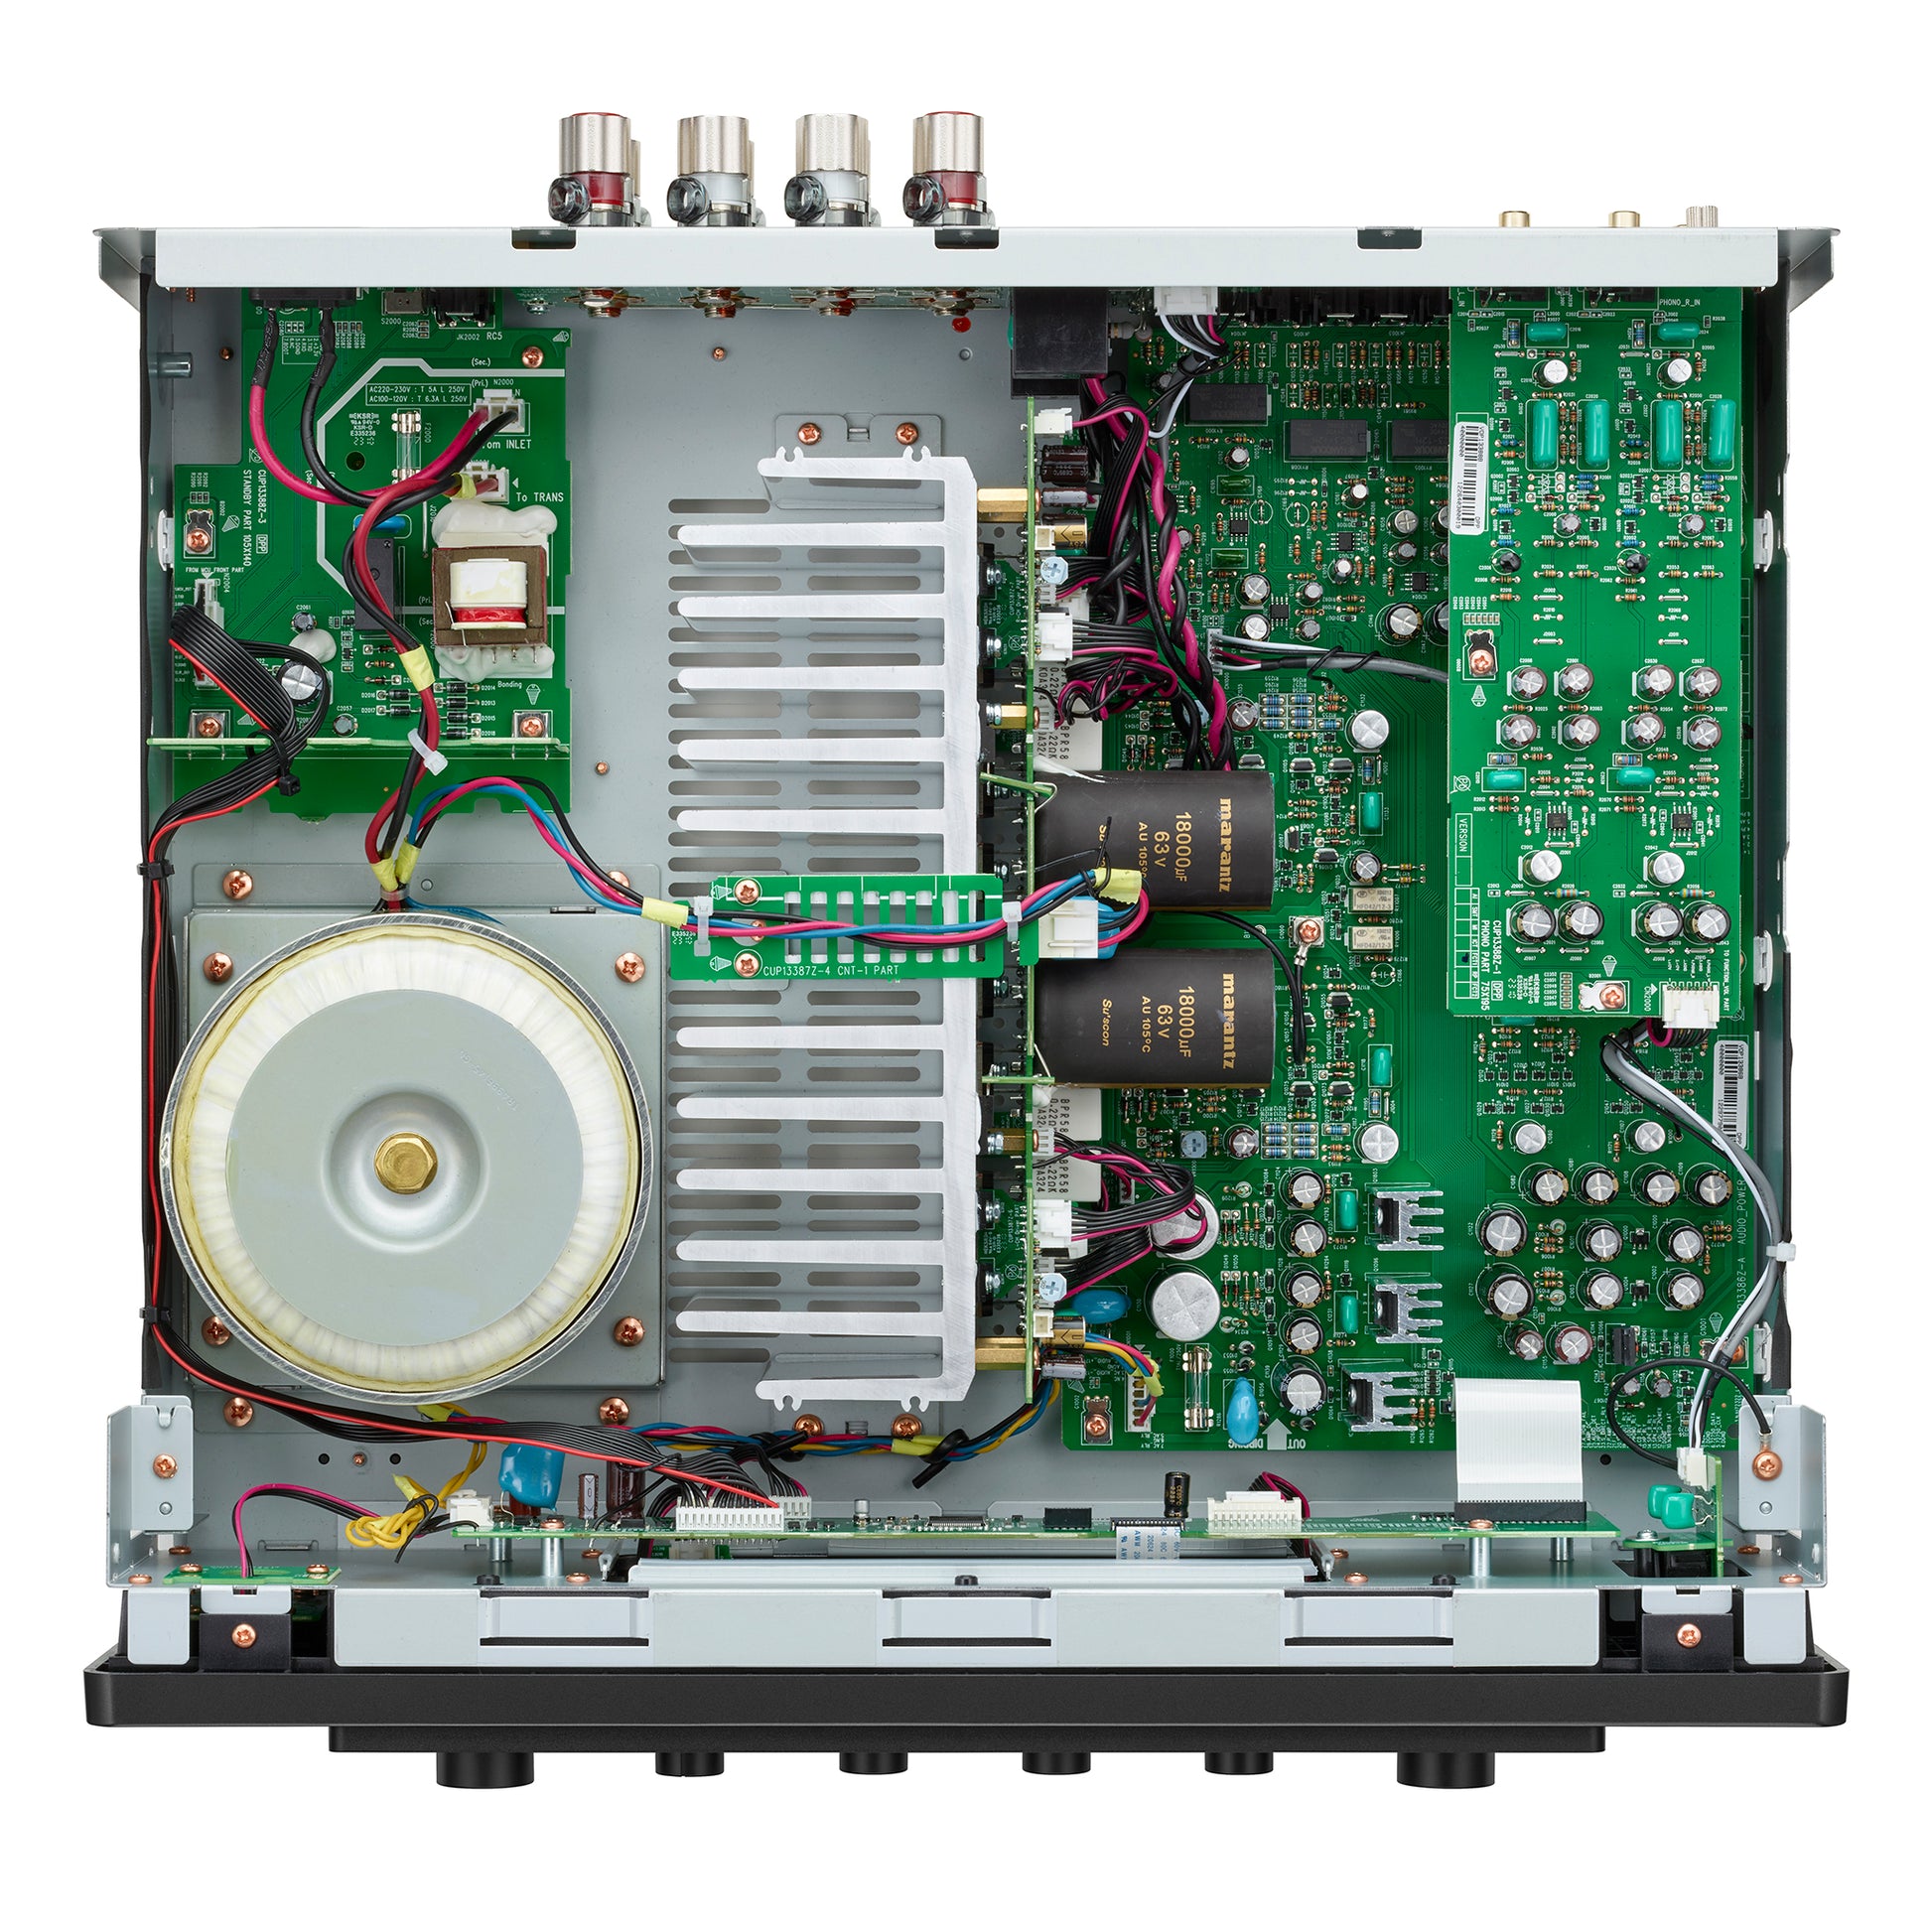 Marantz MODEL 50 Pure Analog Integrated Amplifier - Black